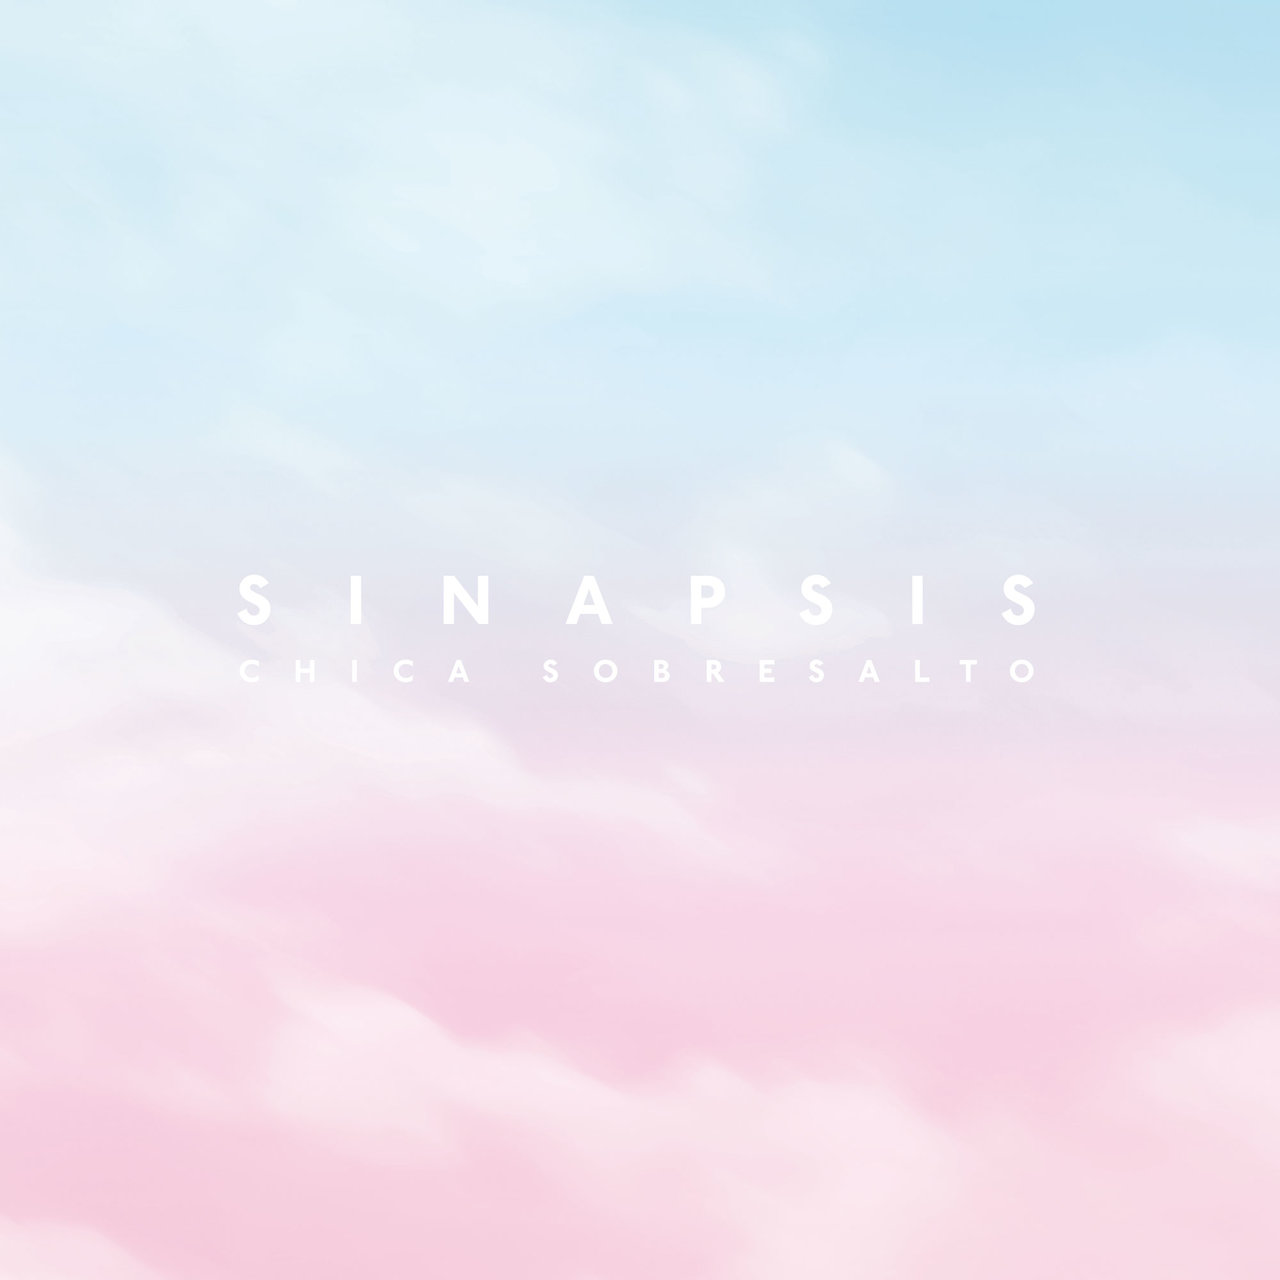 Chica Sobresalto Sinapsis cover artwork